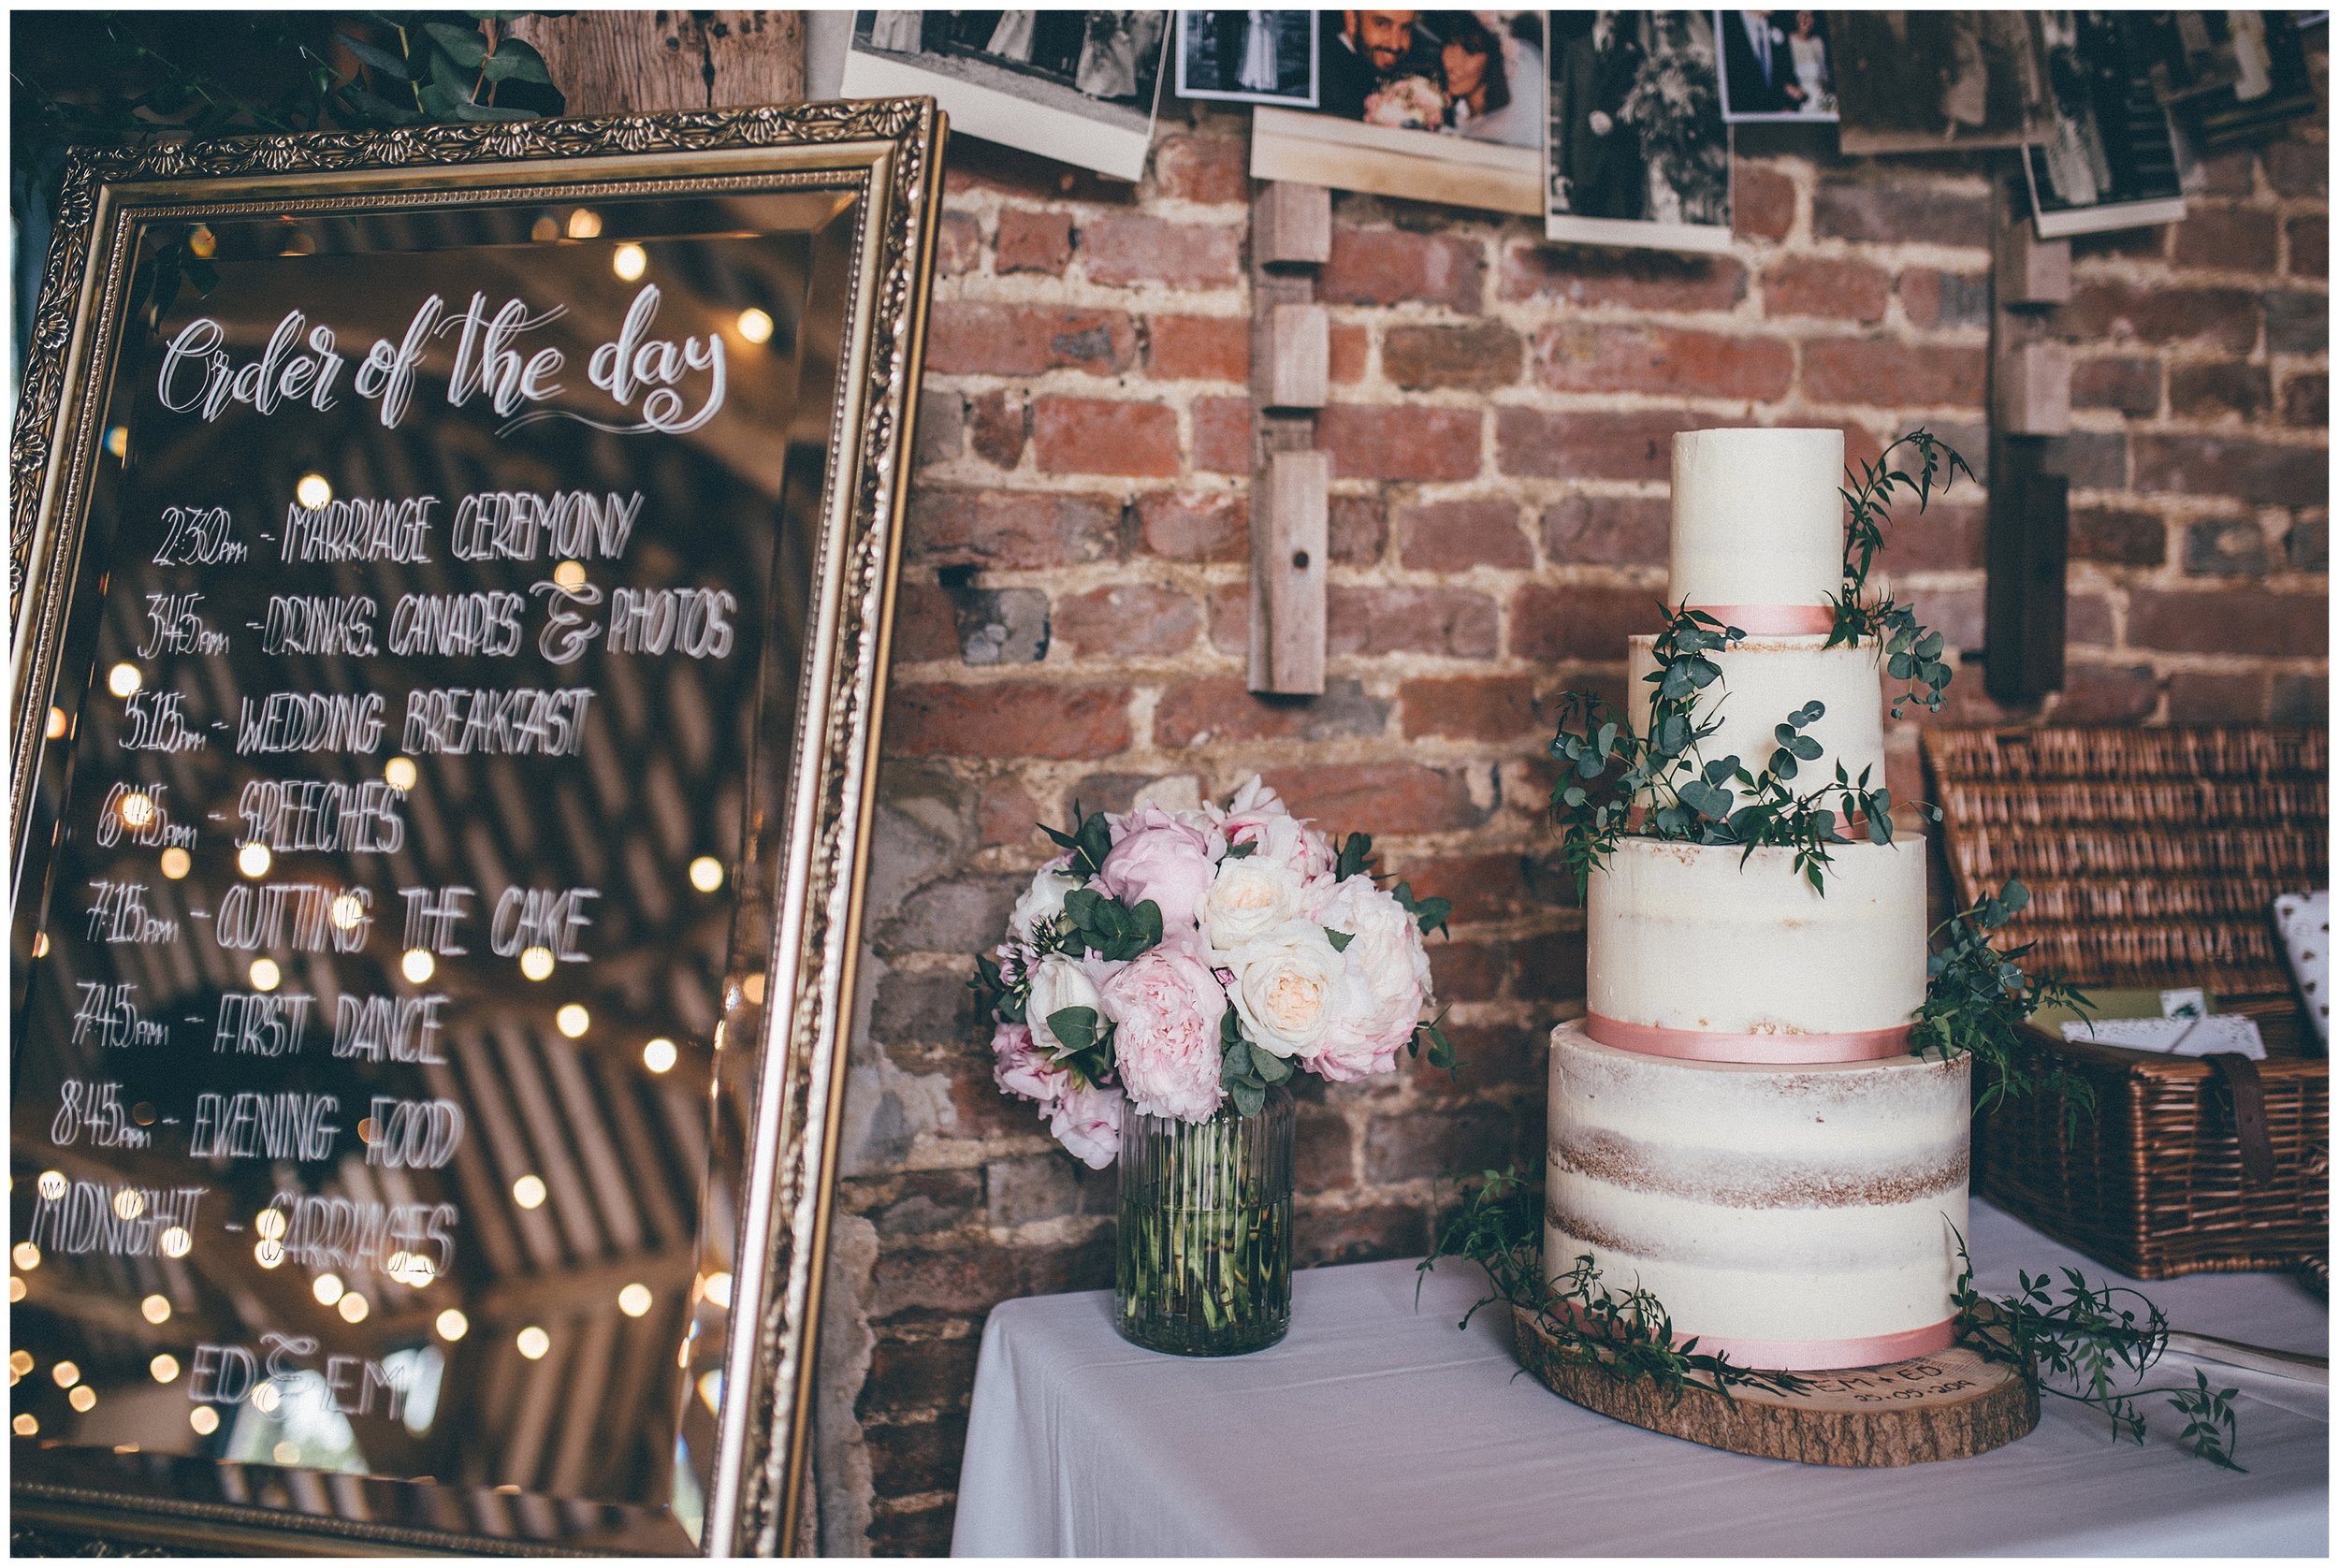 Stunning wedding cake by Sugarbuttons at Henham Park wedding barns.